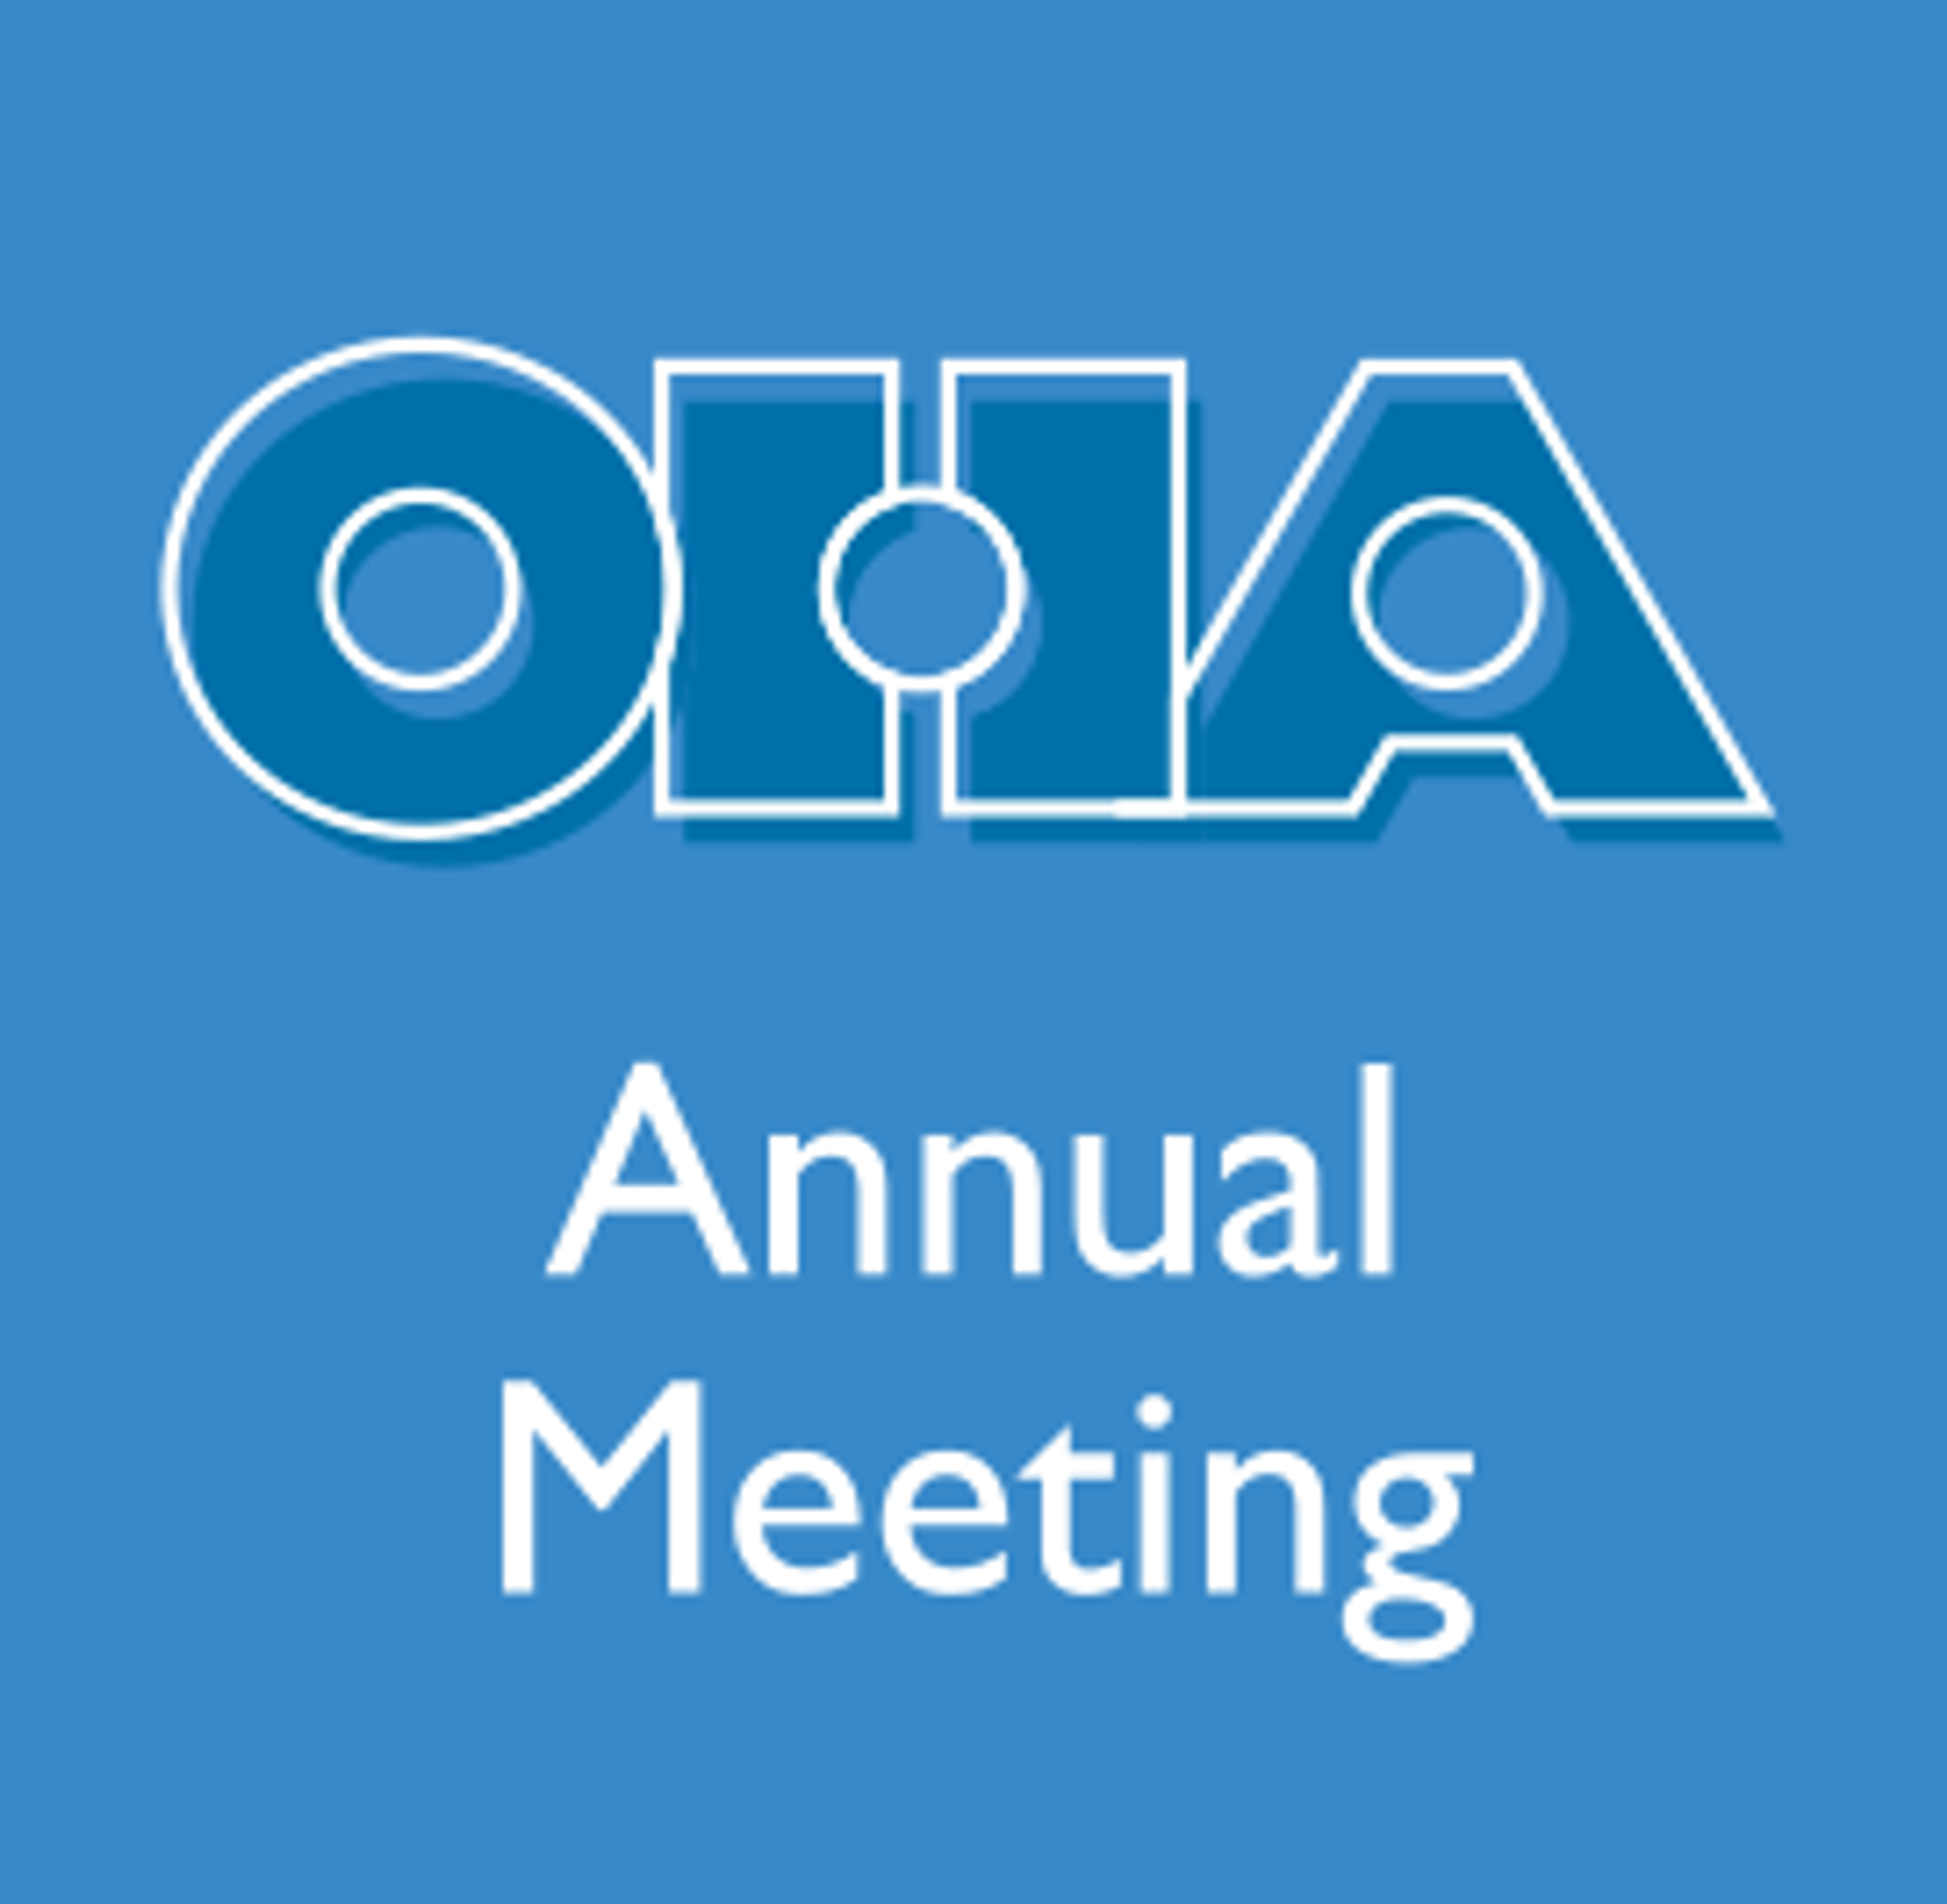 OHA22 Registration is now Open!